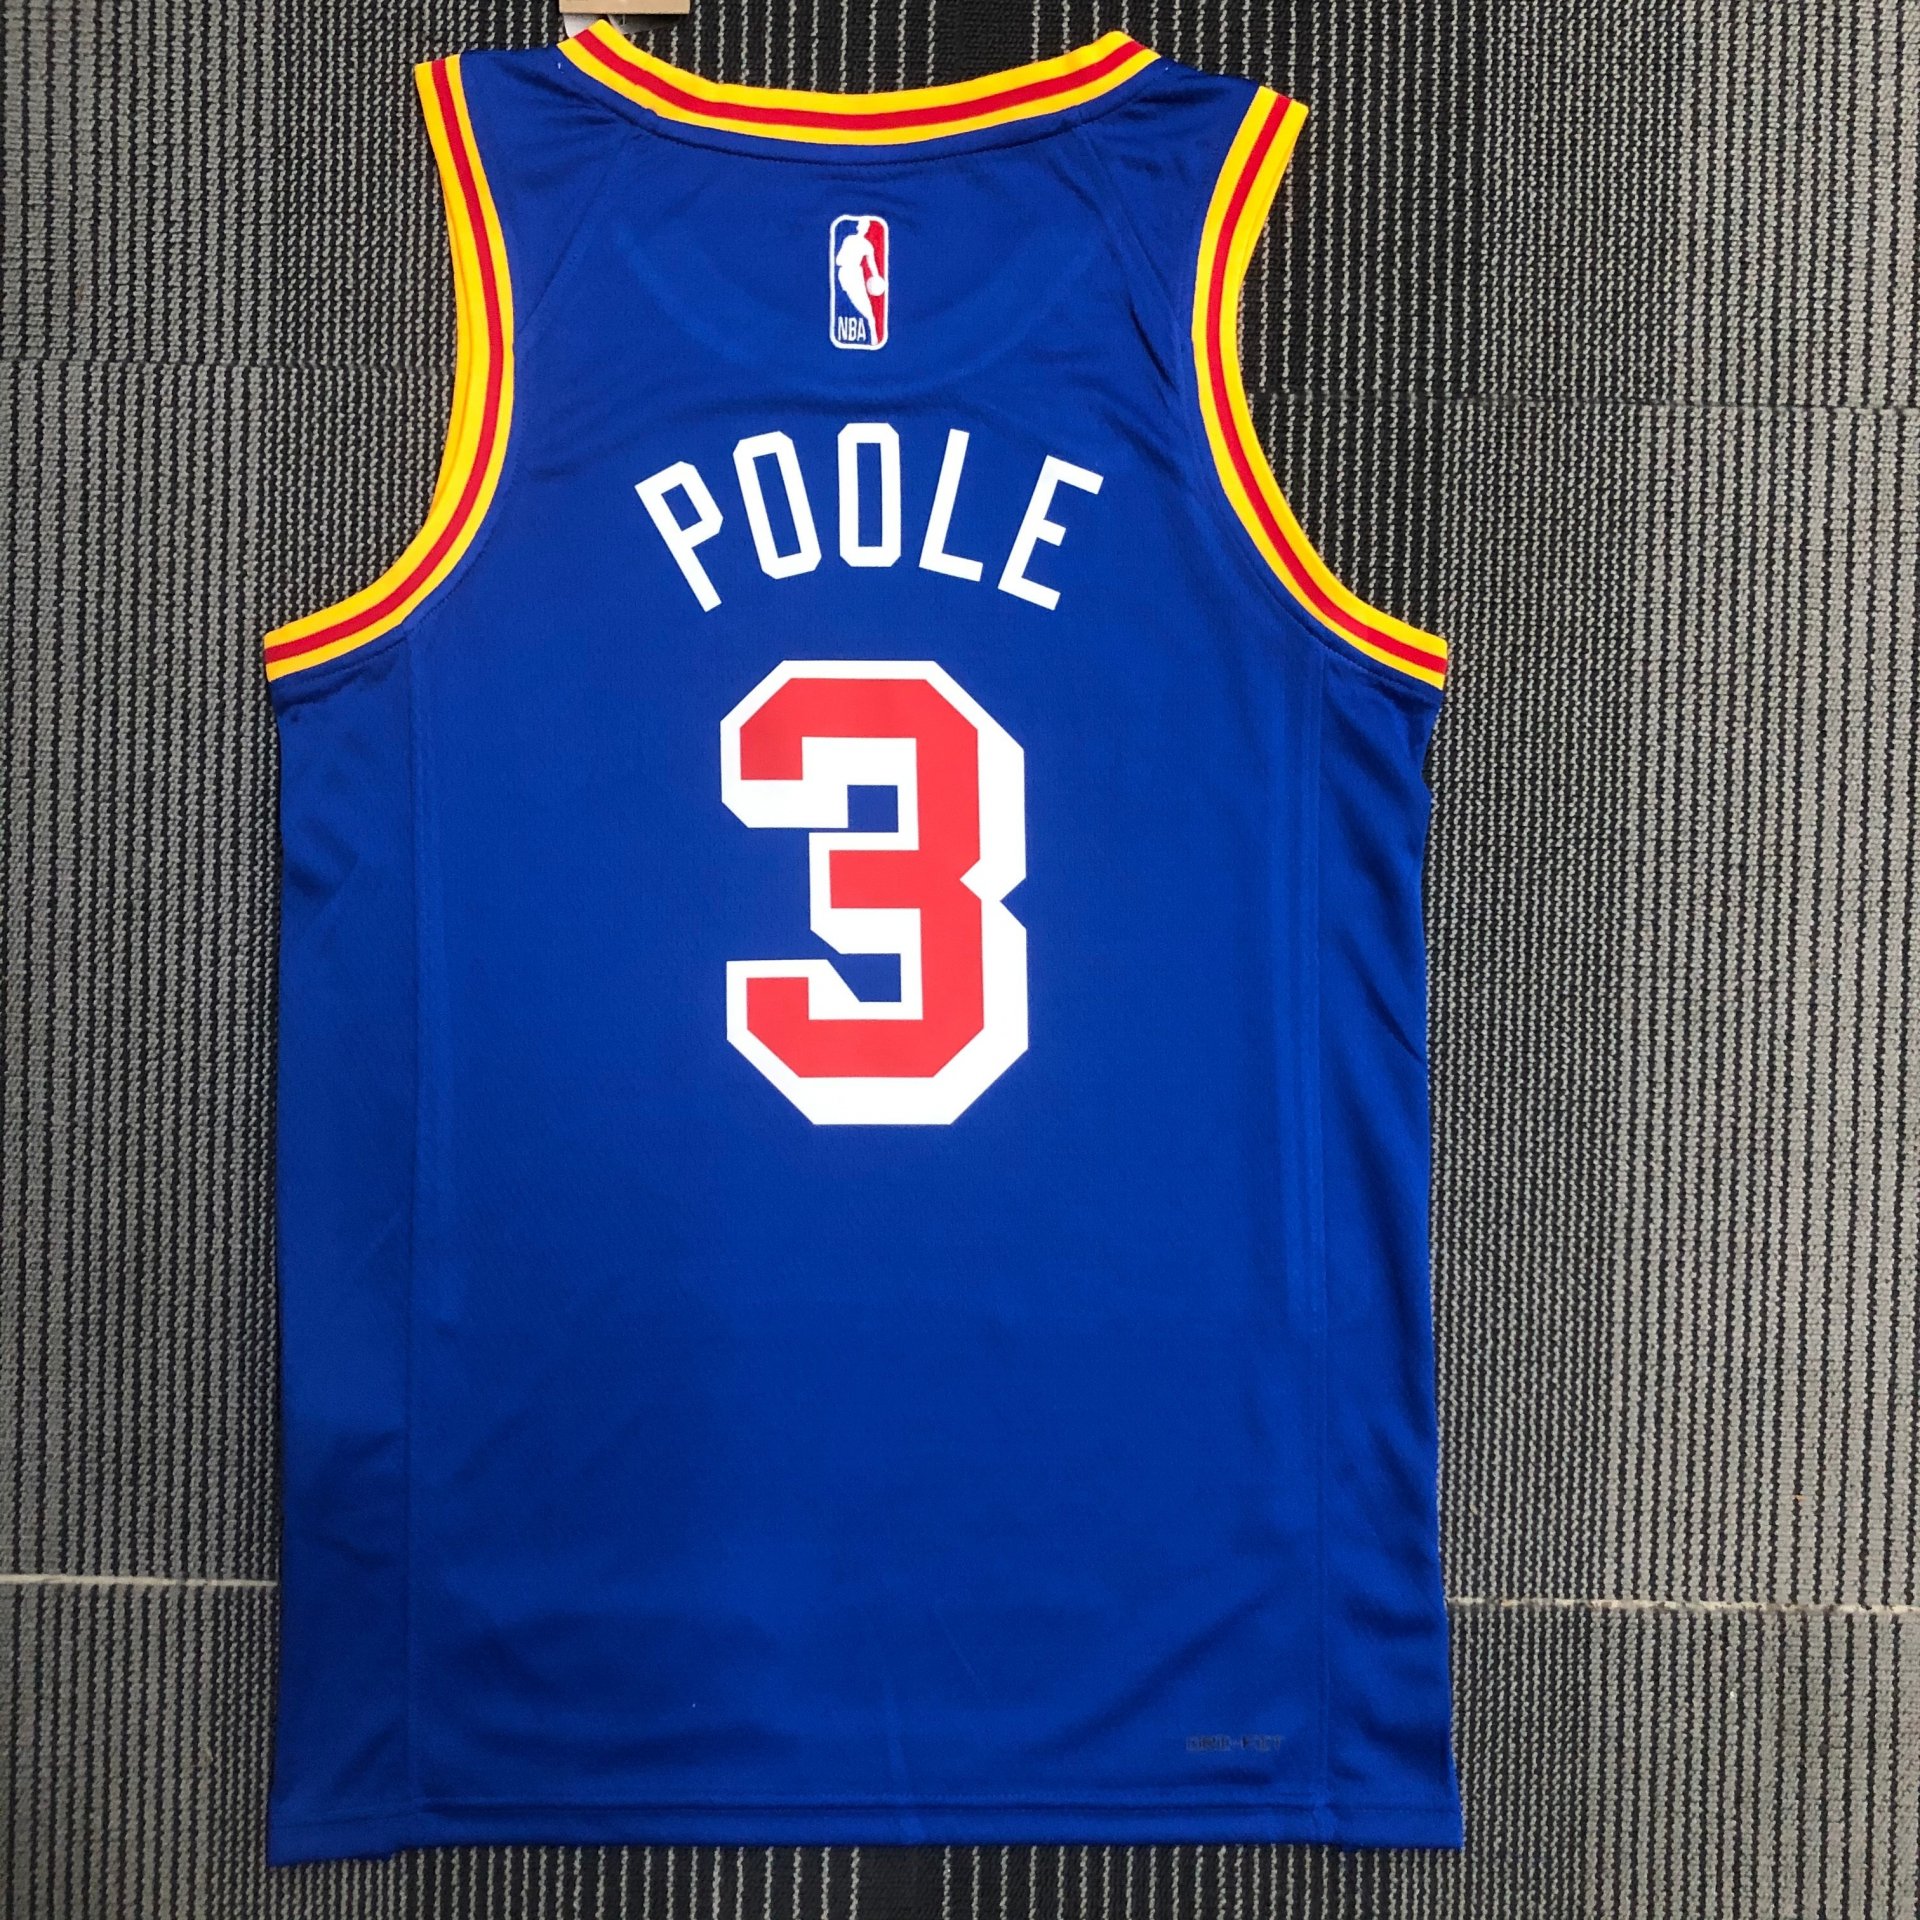 Jordan Poole Apparel, Jordan Poole Golden State Warriors Jerseys